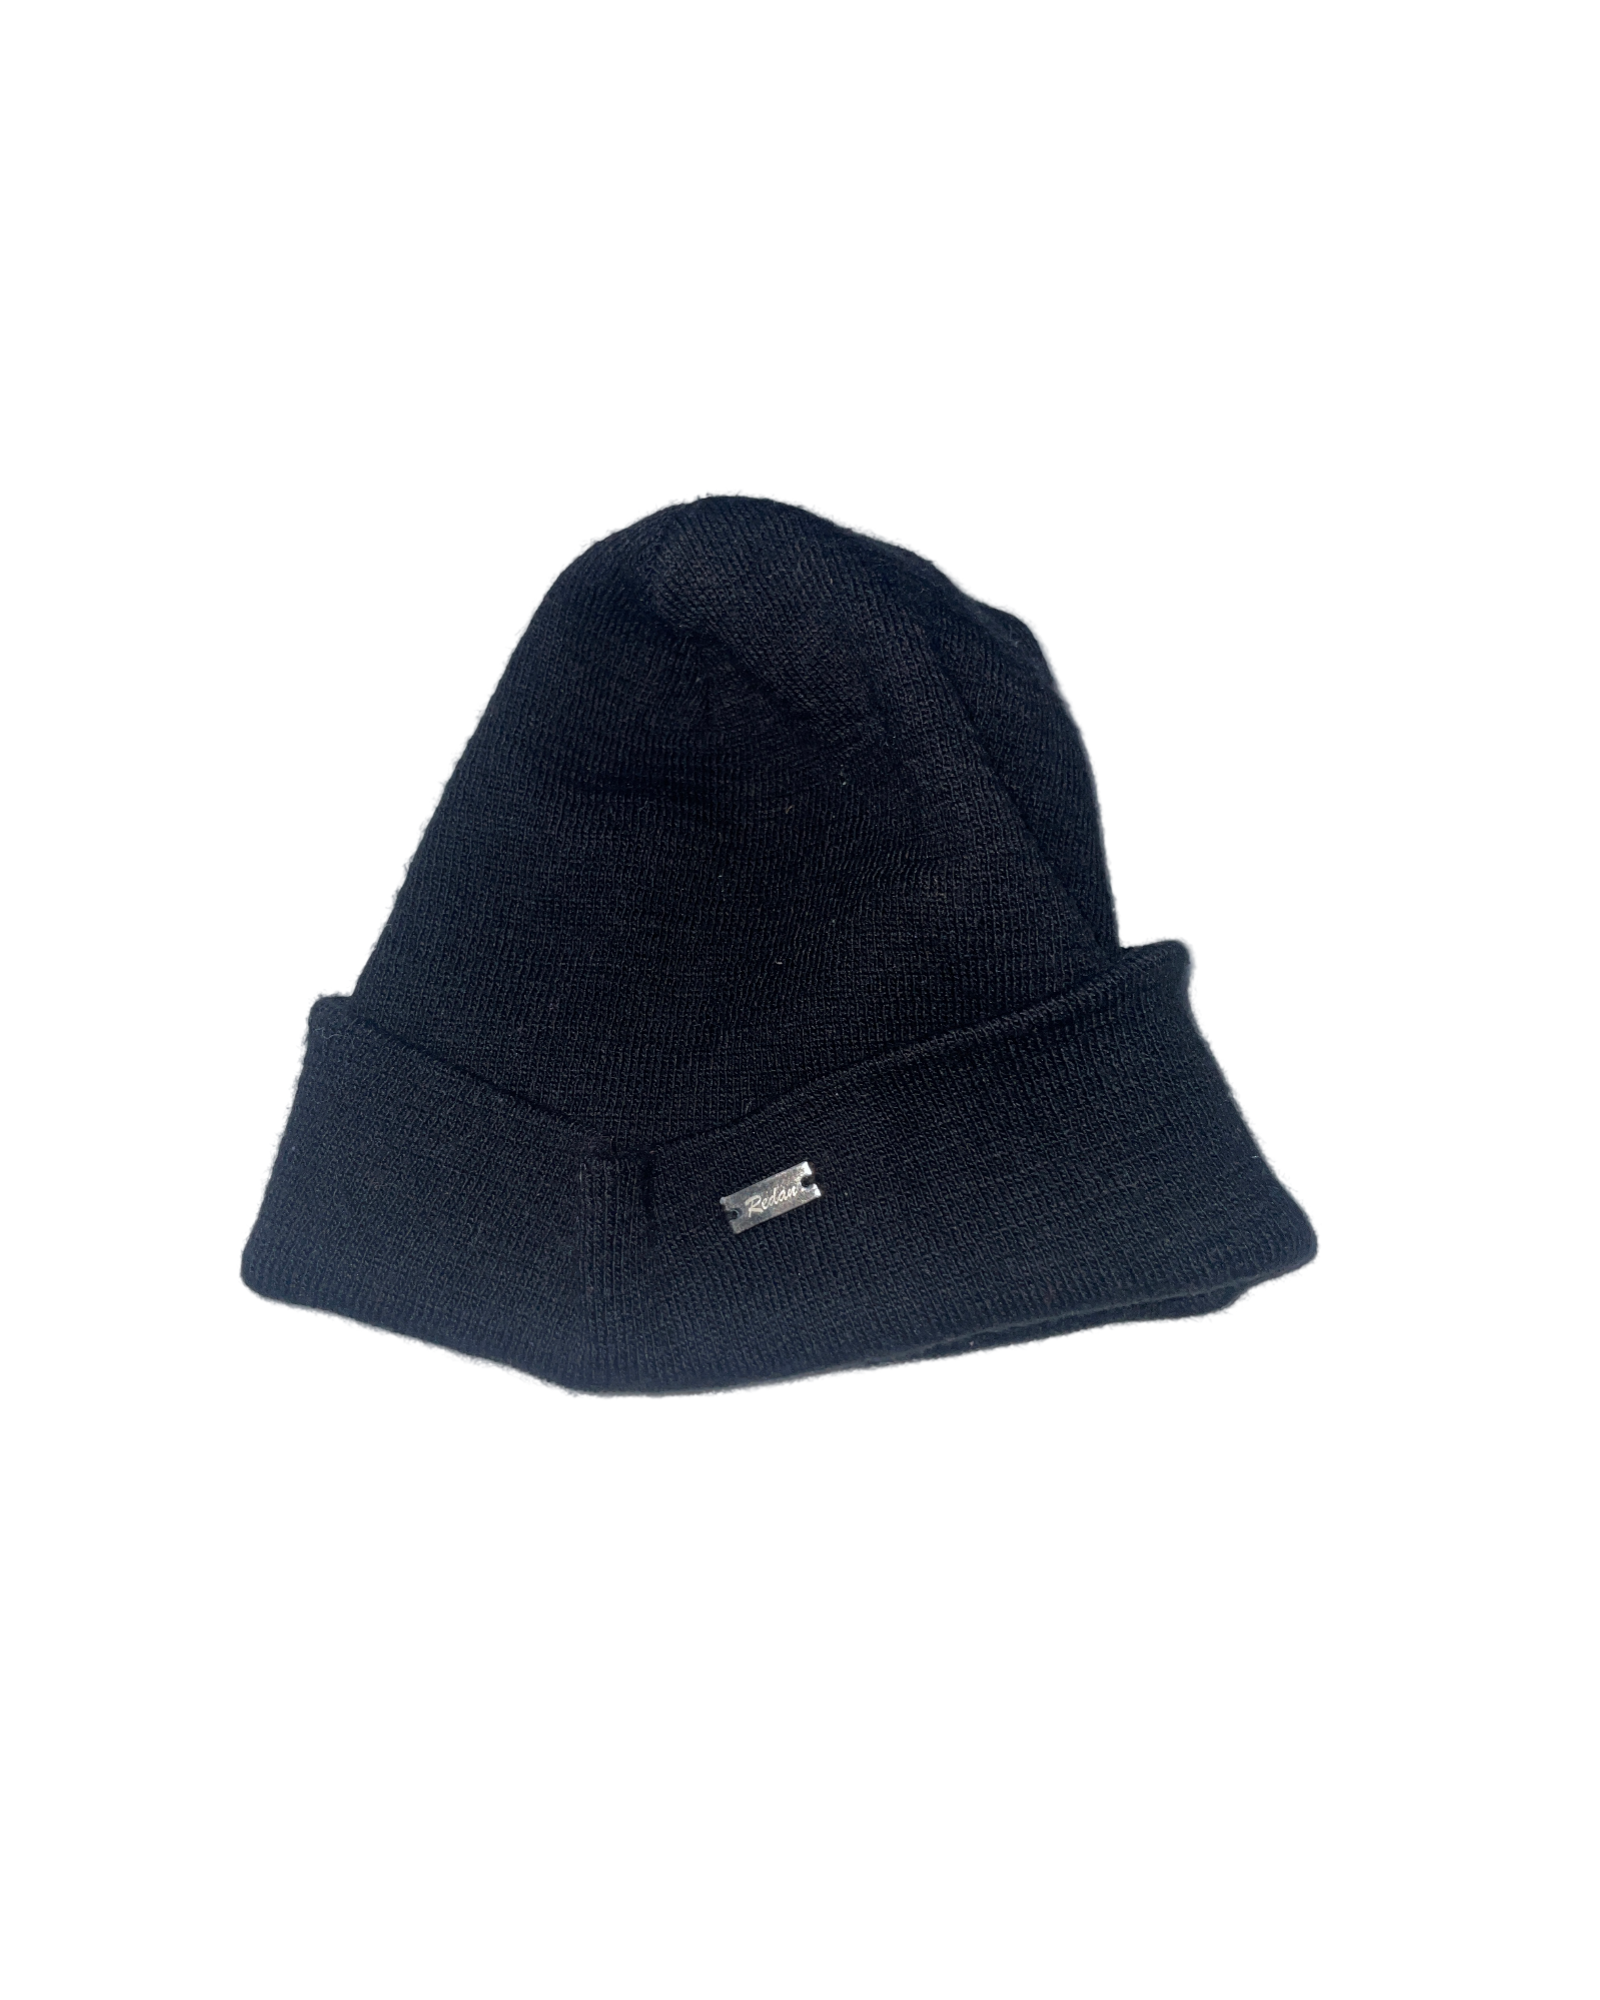 Redan Thinsulate Fine Knit Thermal Beanie Hat Winter Black SKU 5085